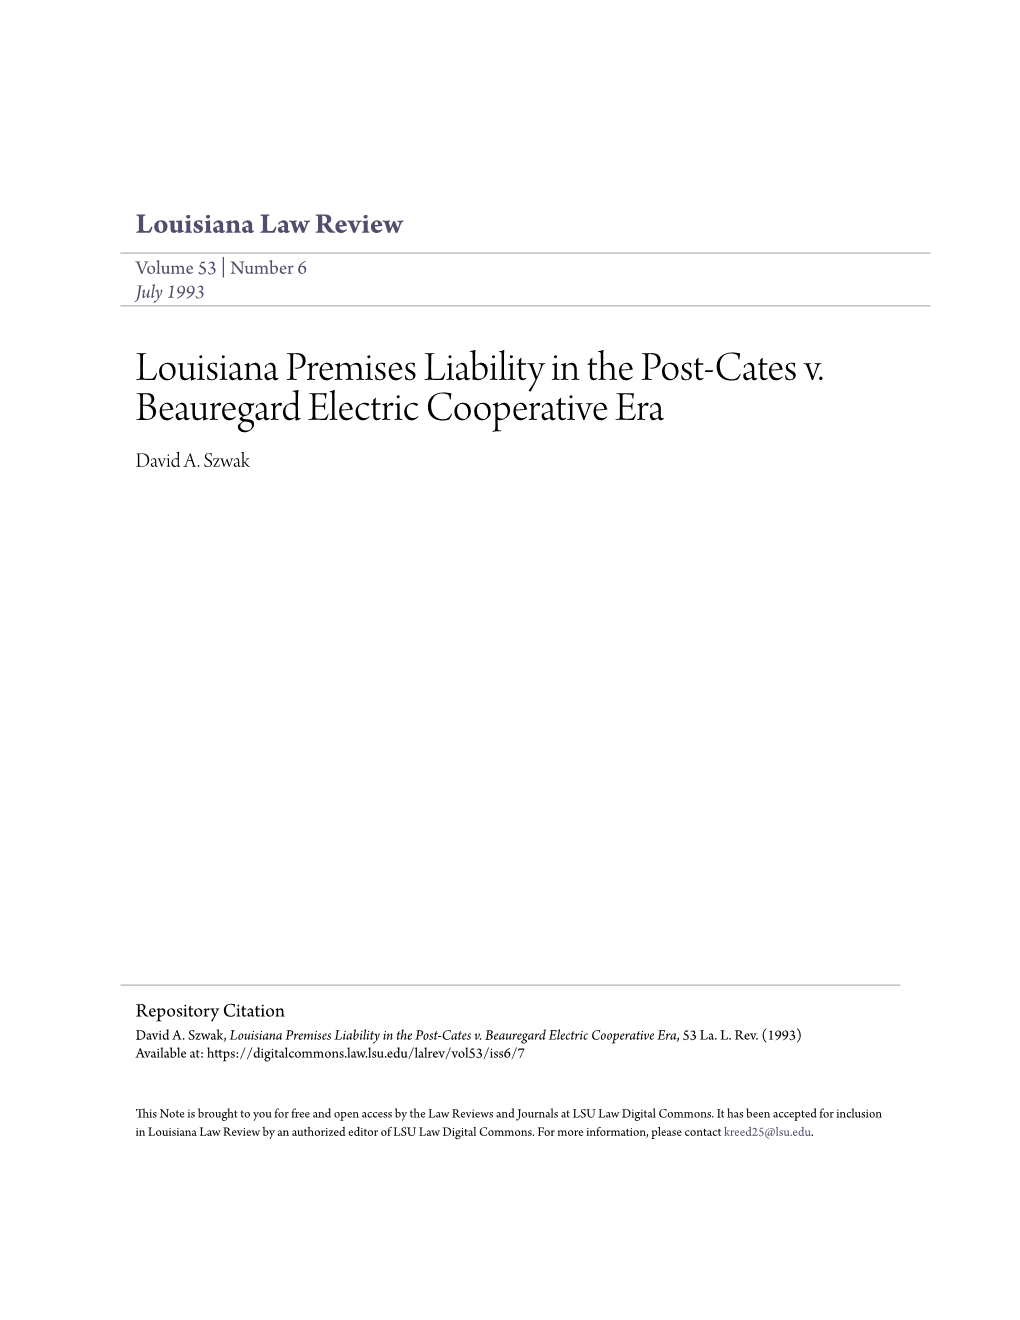 Louisiana Premises Liability in the Post-Cates V